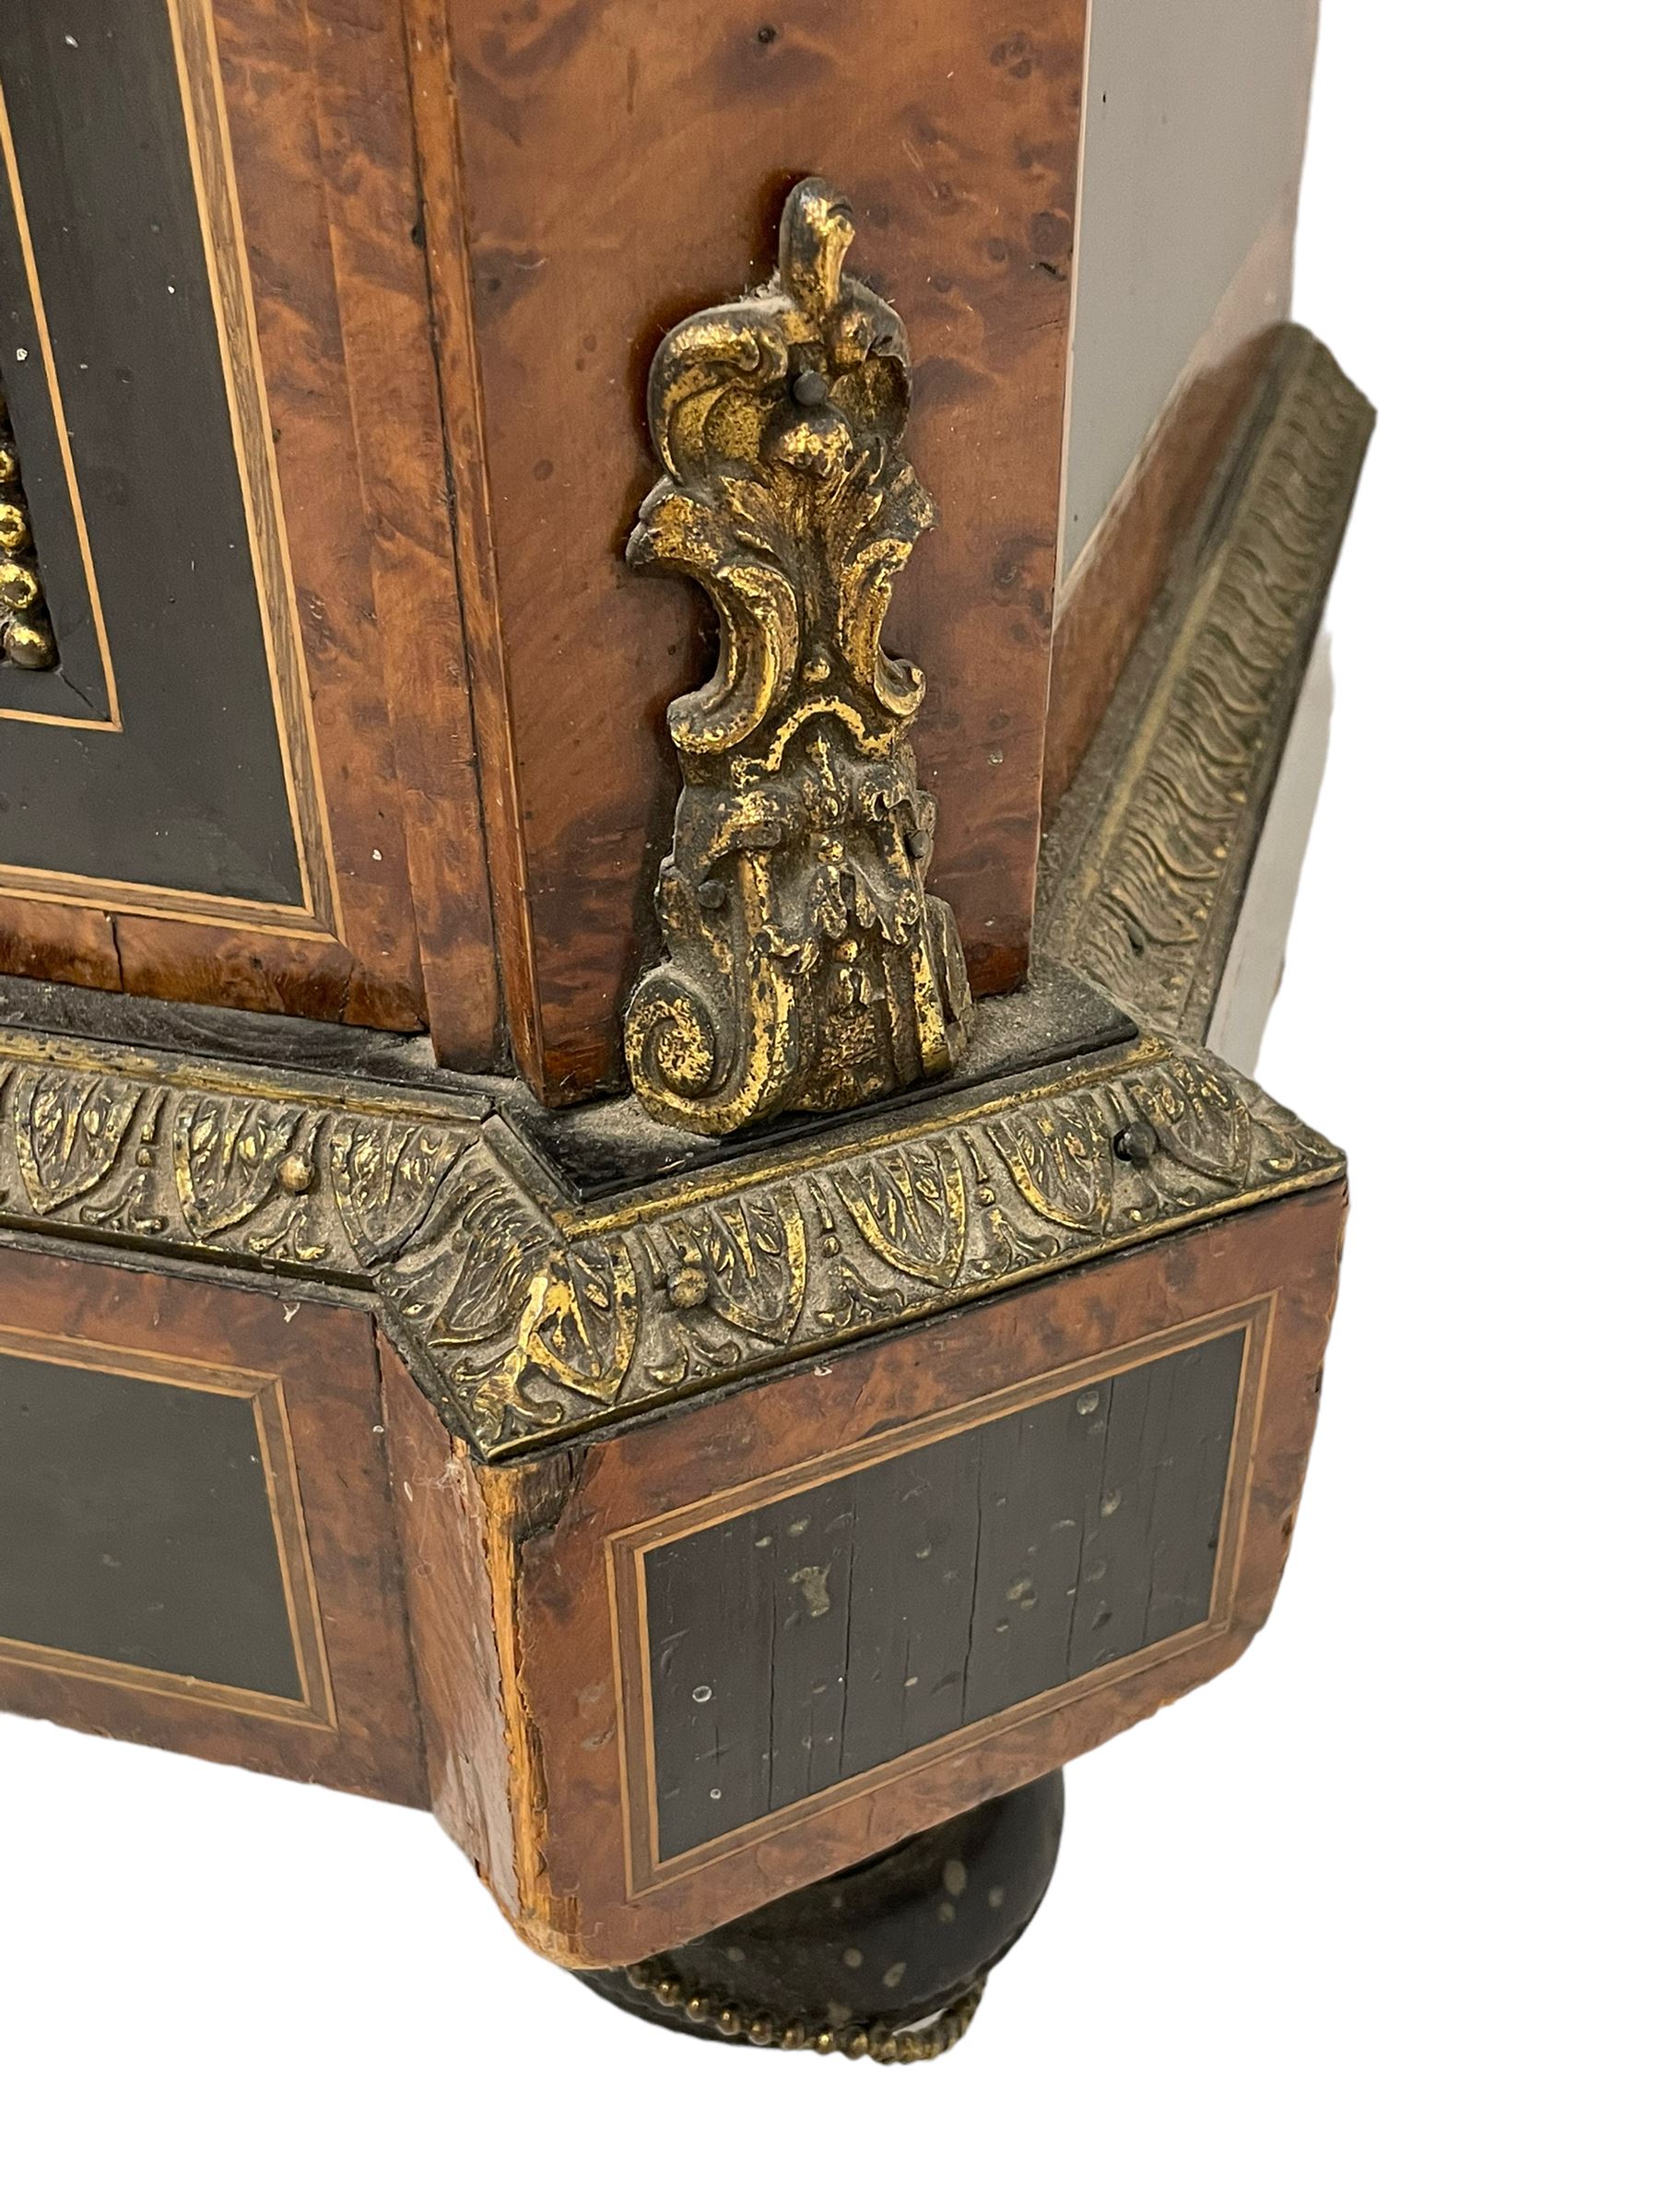 Victorian ebonised and amboyna wood credenza pier cabinet - Image 18 of 26